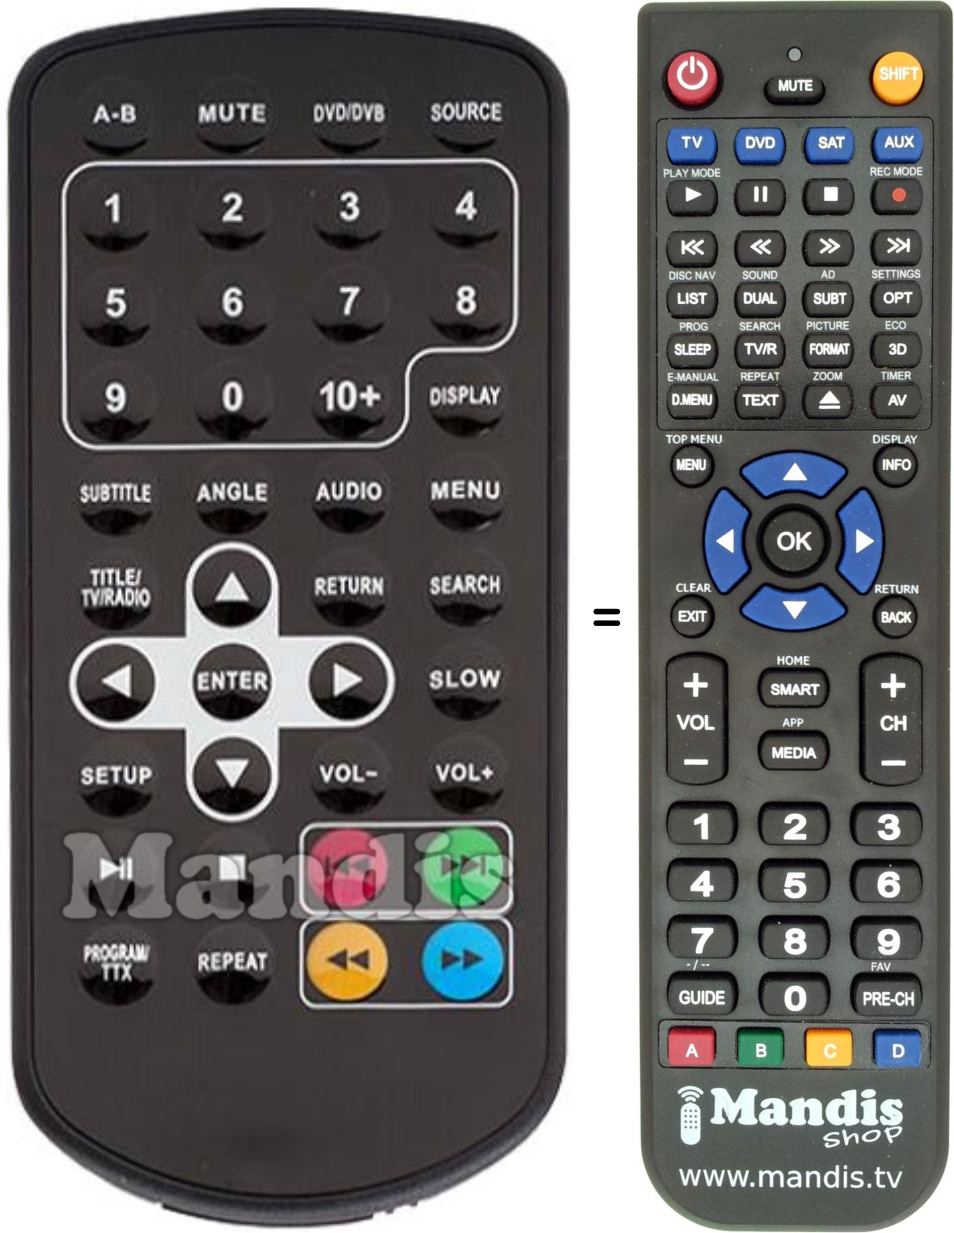 Replacement remote control Trevi DVBX1412